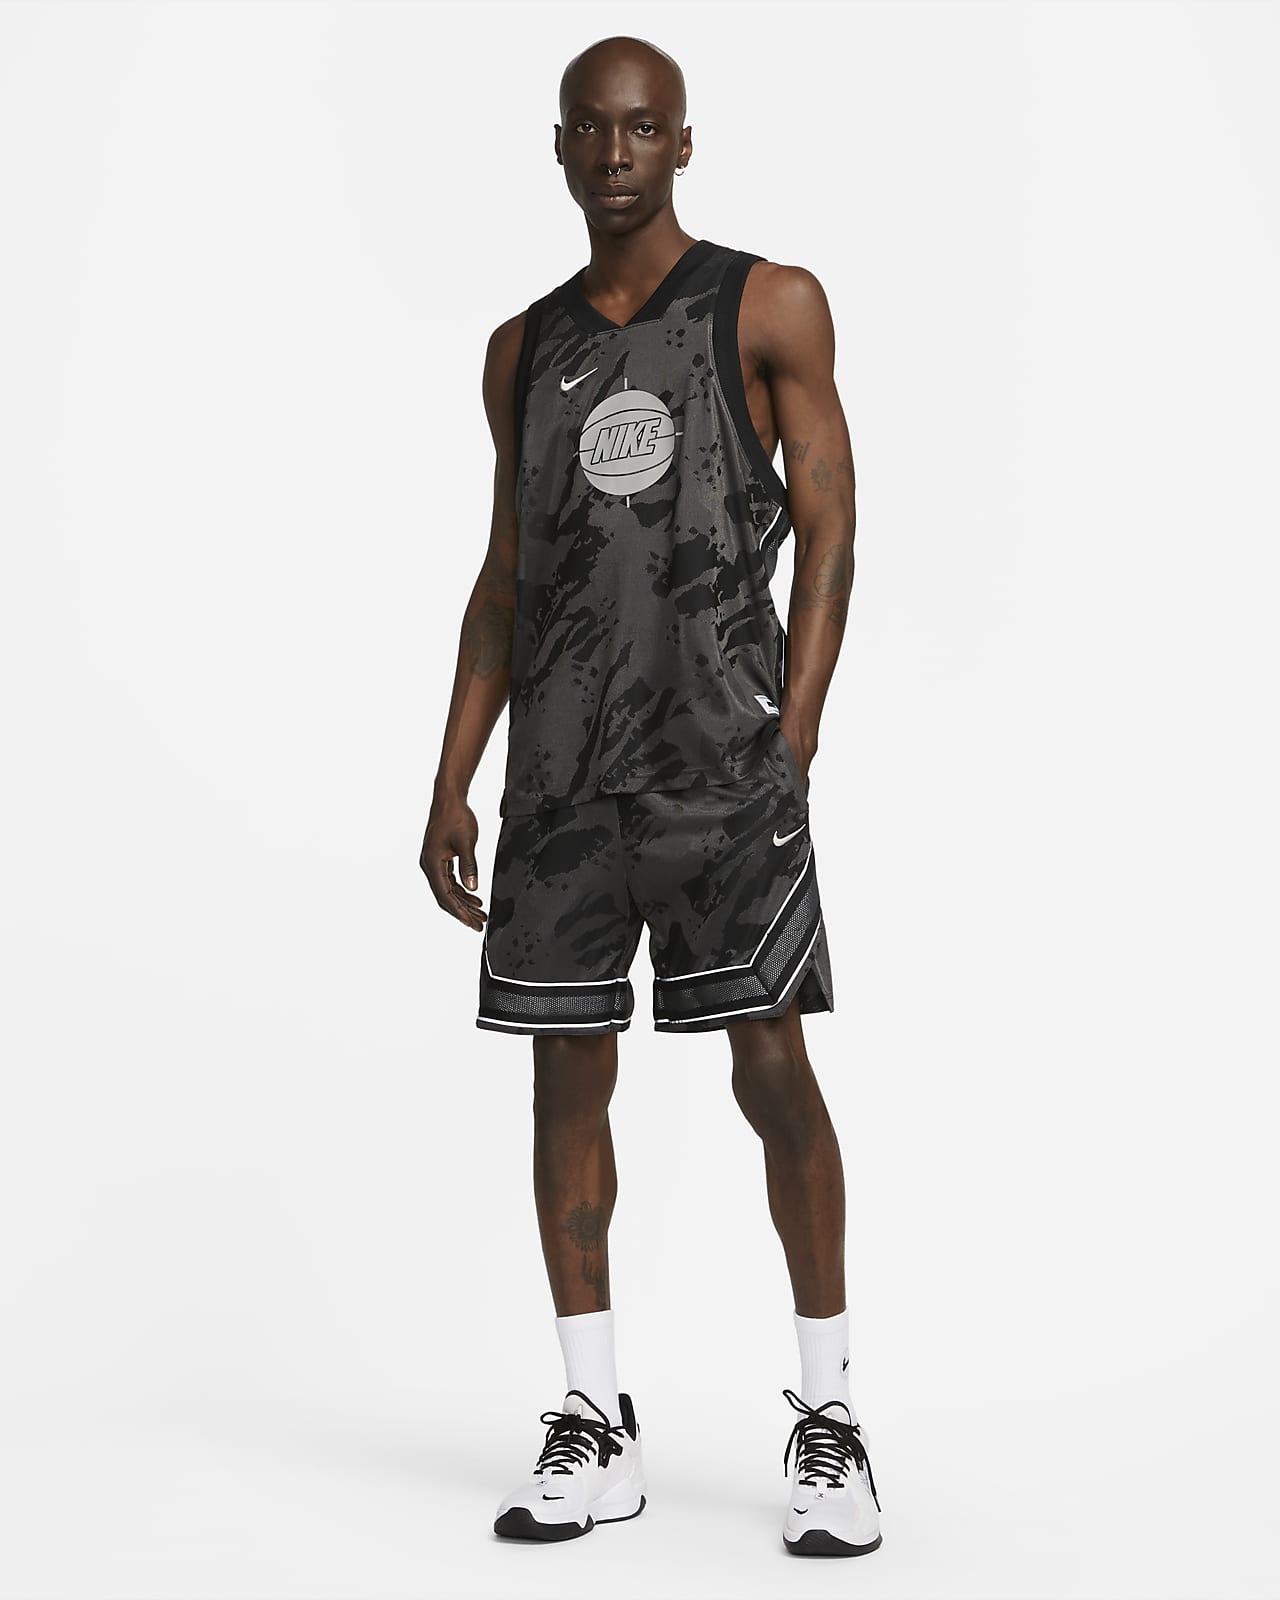 FBT Basketball jersey pants  Shorts Mens Fashion Activewear on Carousell